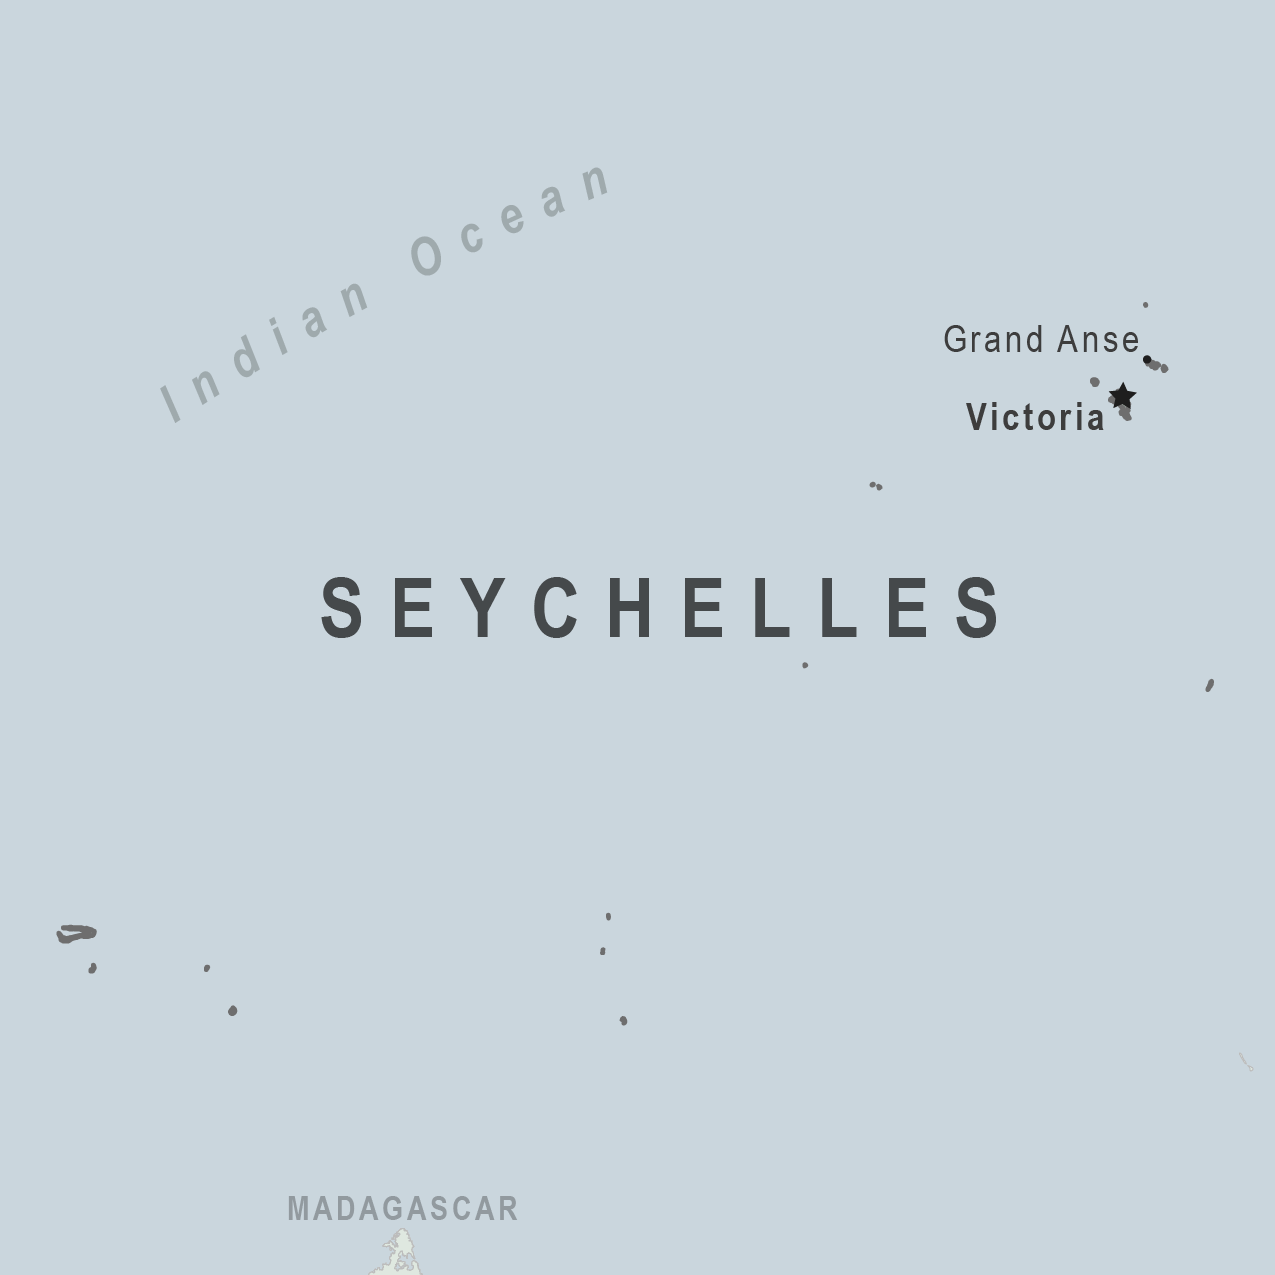 seychelles travel requirements covid